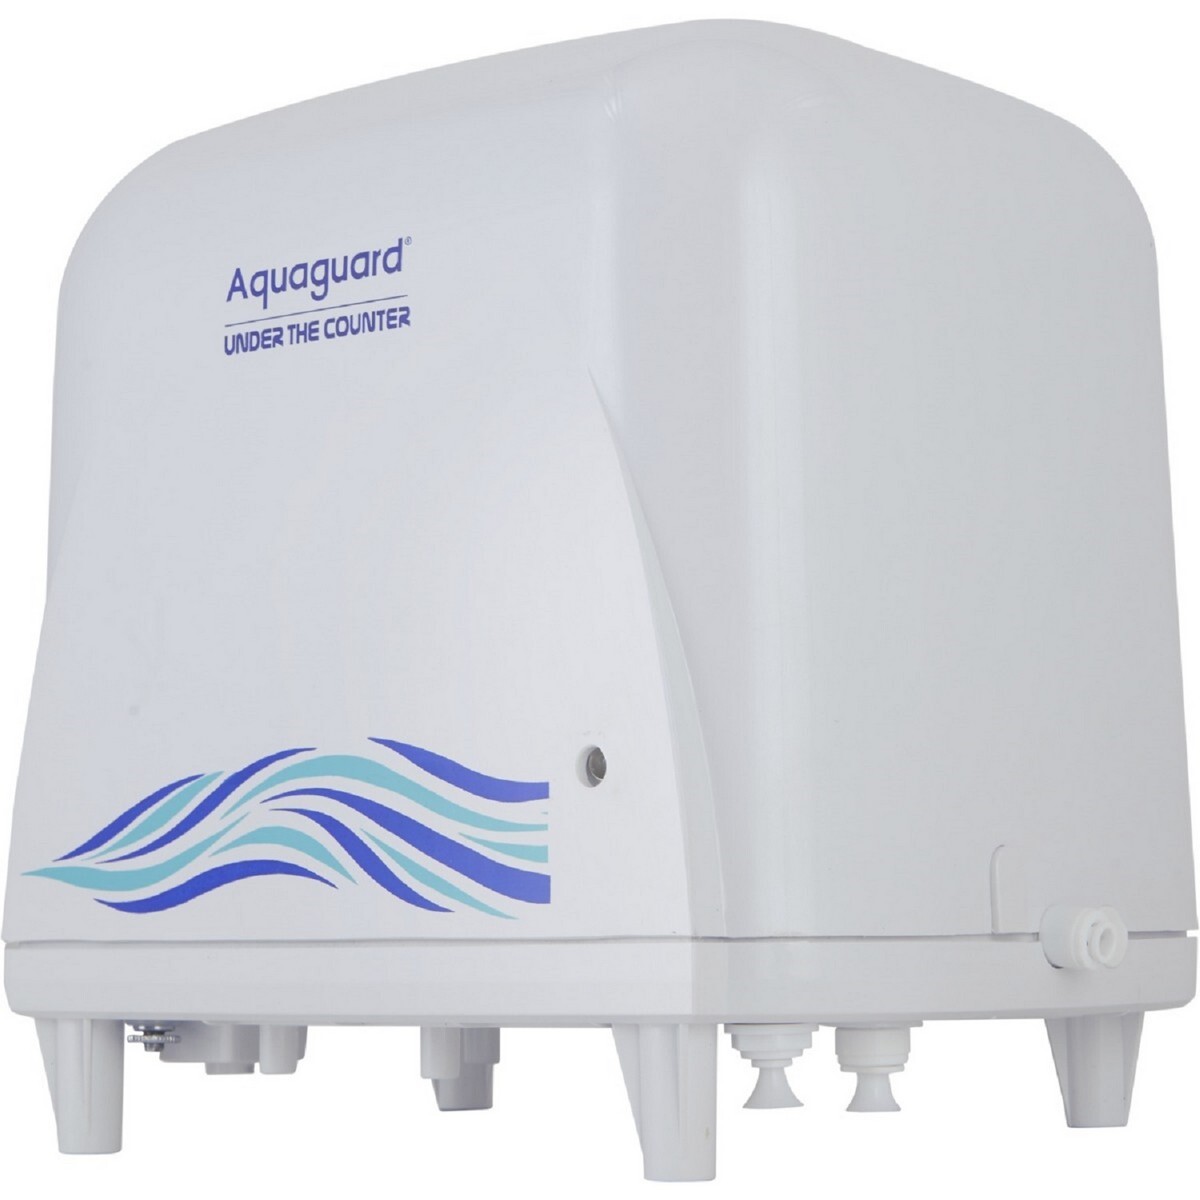 Aquaguard UTC UV Booster Electrical Water Purifier